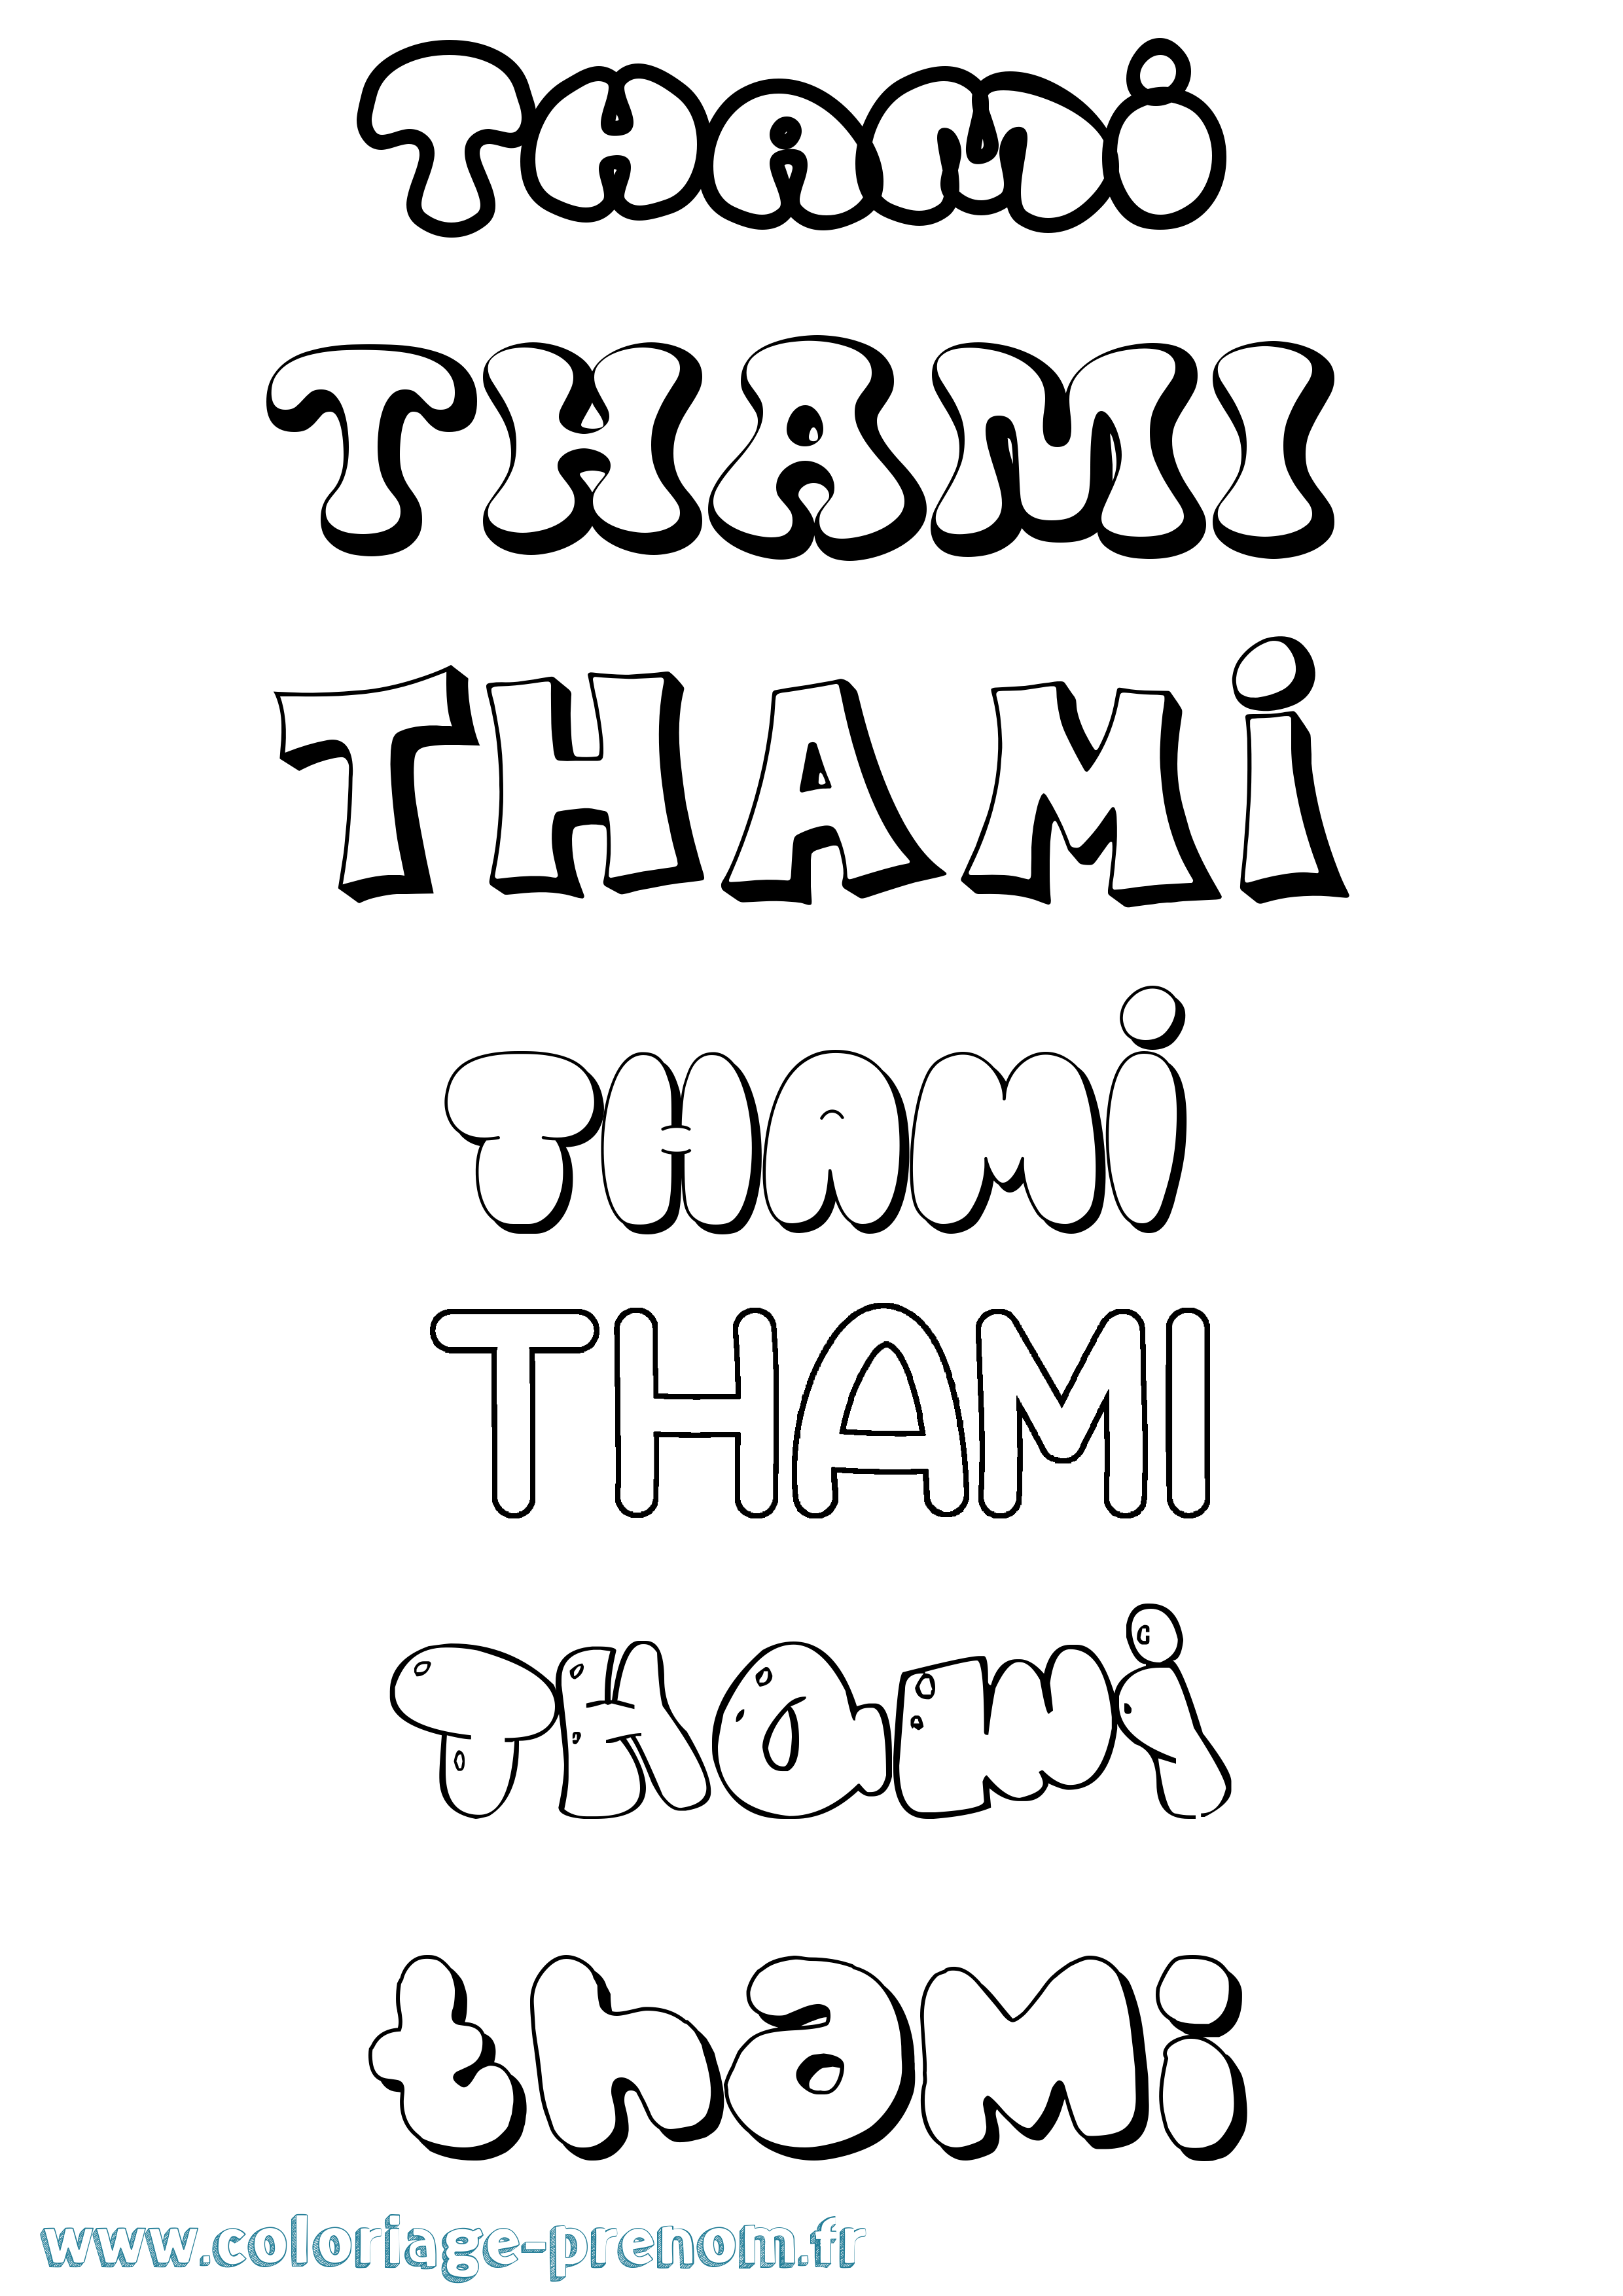 Coloriage prénom Thami Bubble